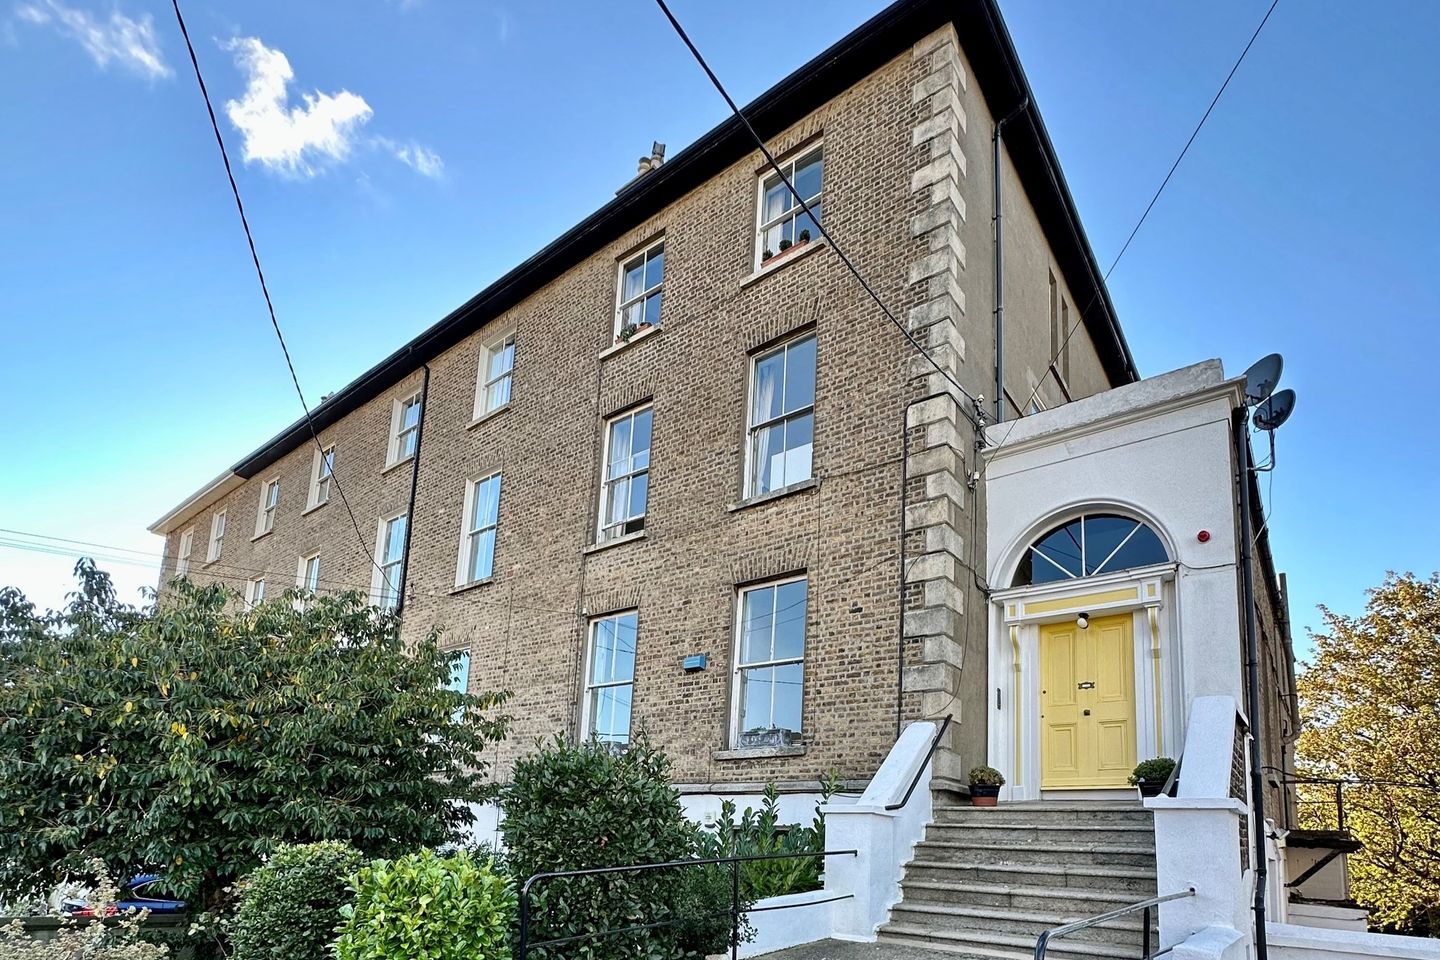 Apartment 4, Langara, Monkstown, Co. Dublin